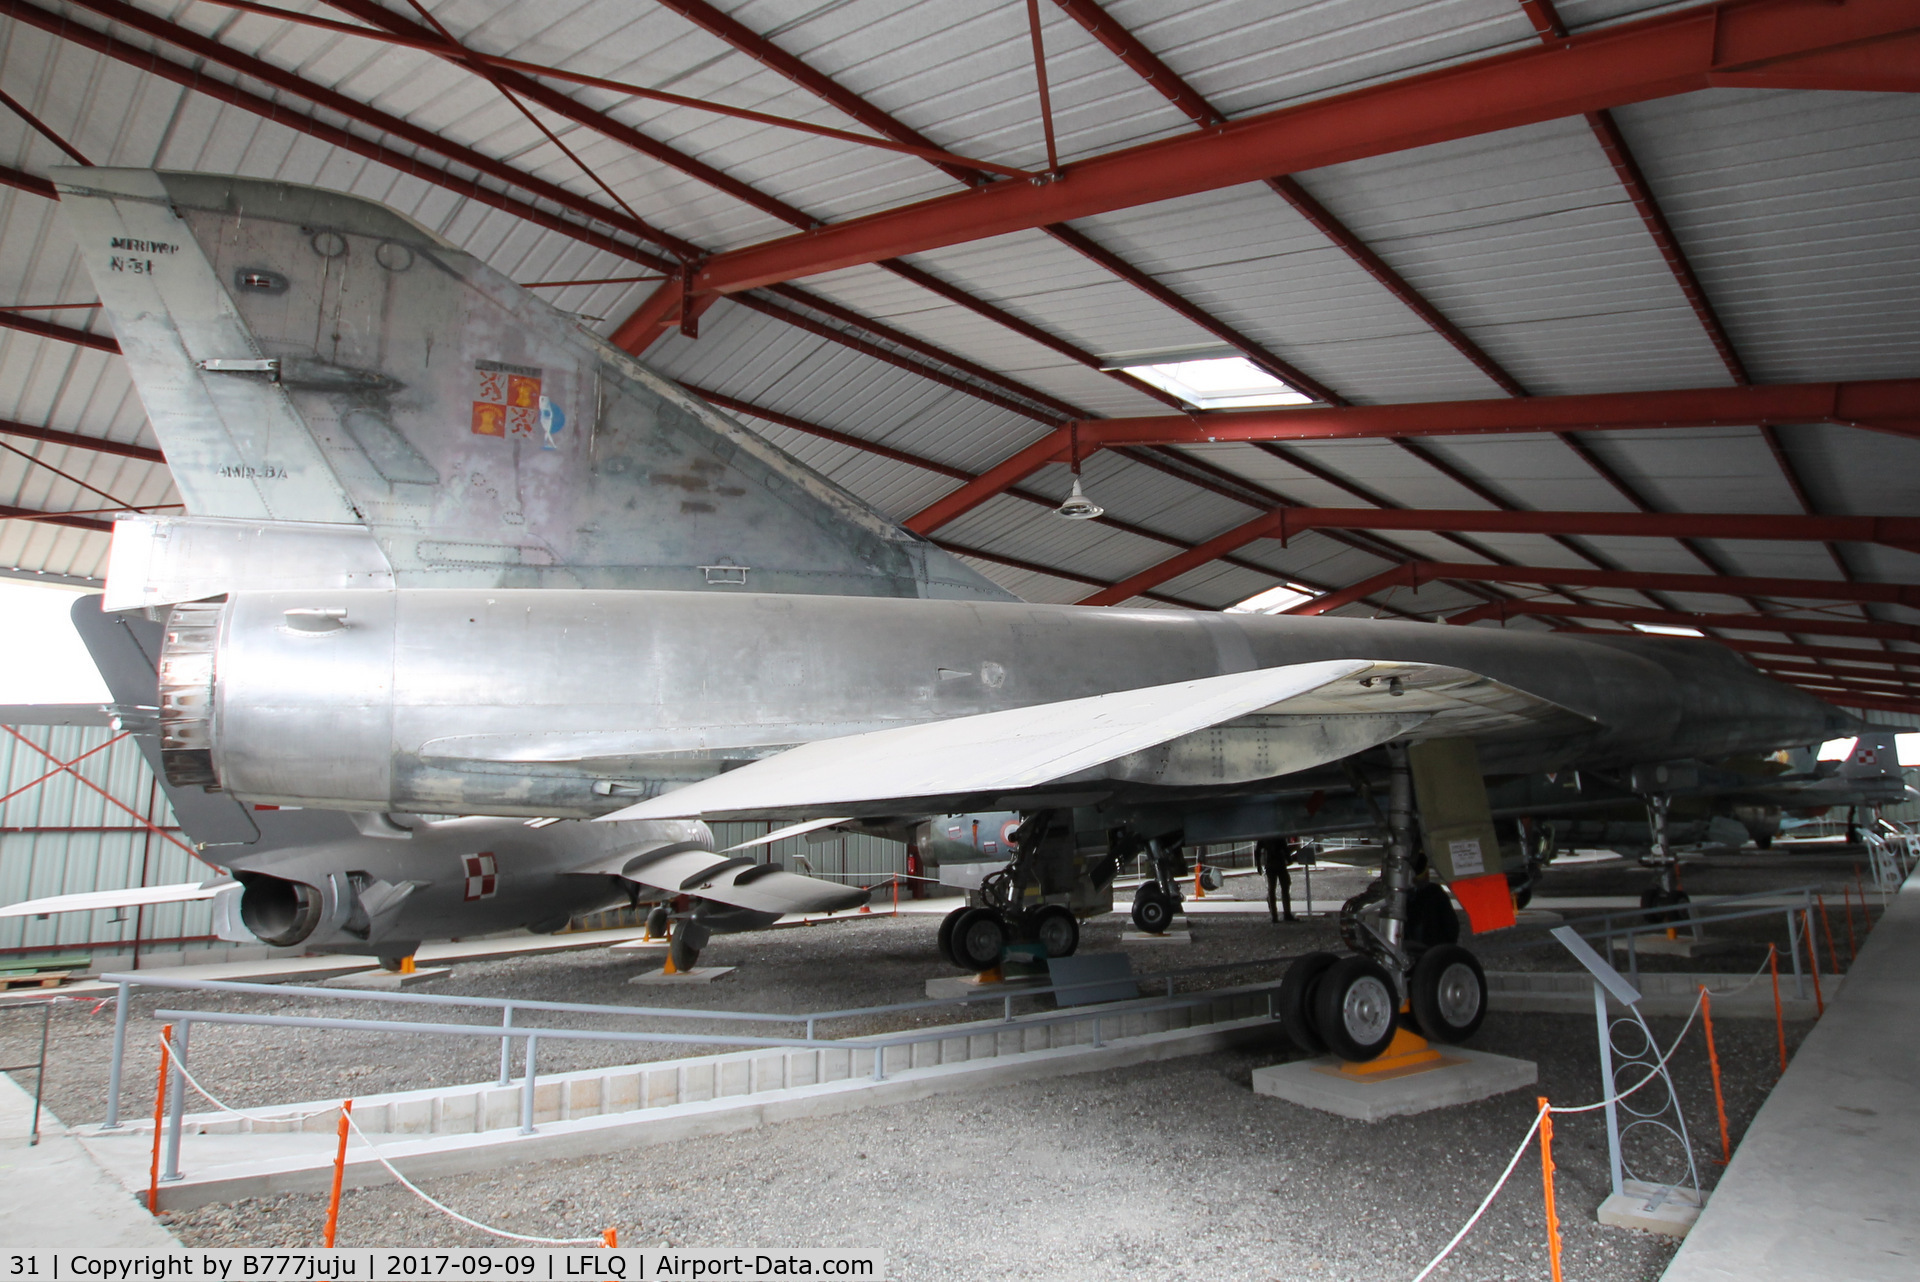 31, Dassault Mirage IVP C/N 31, on display